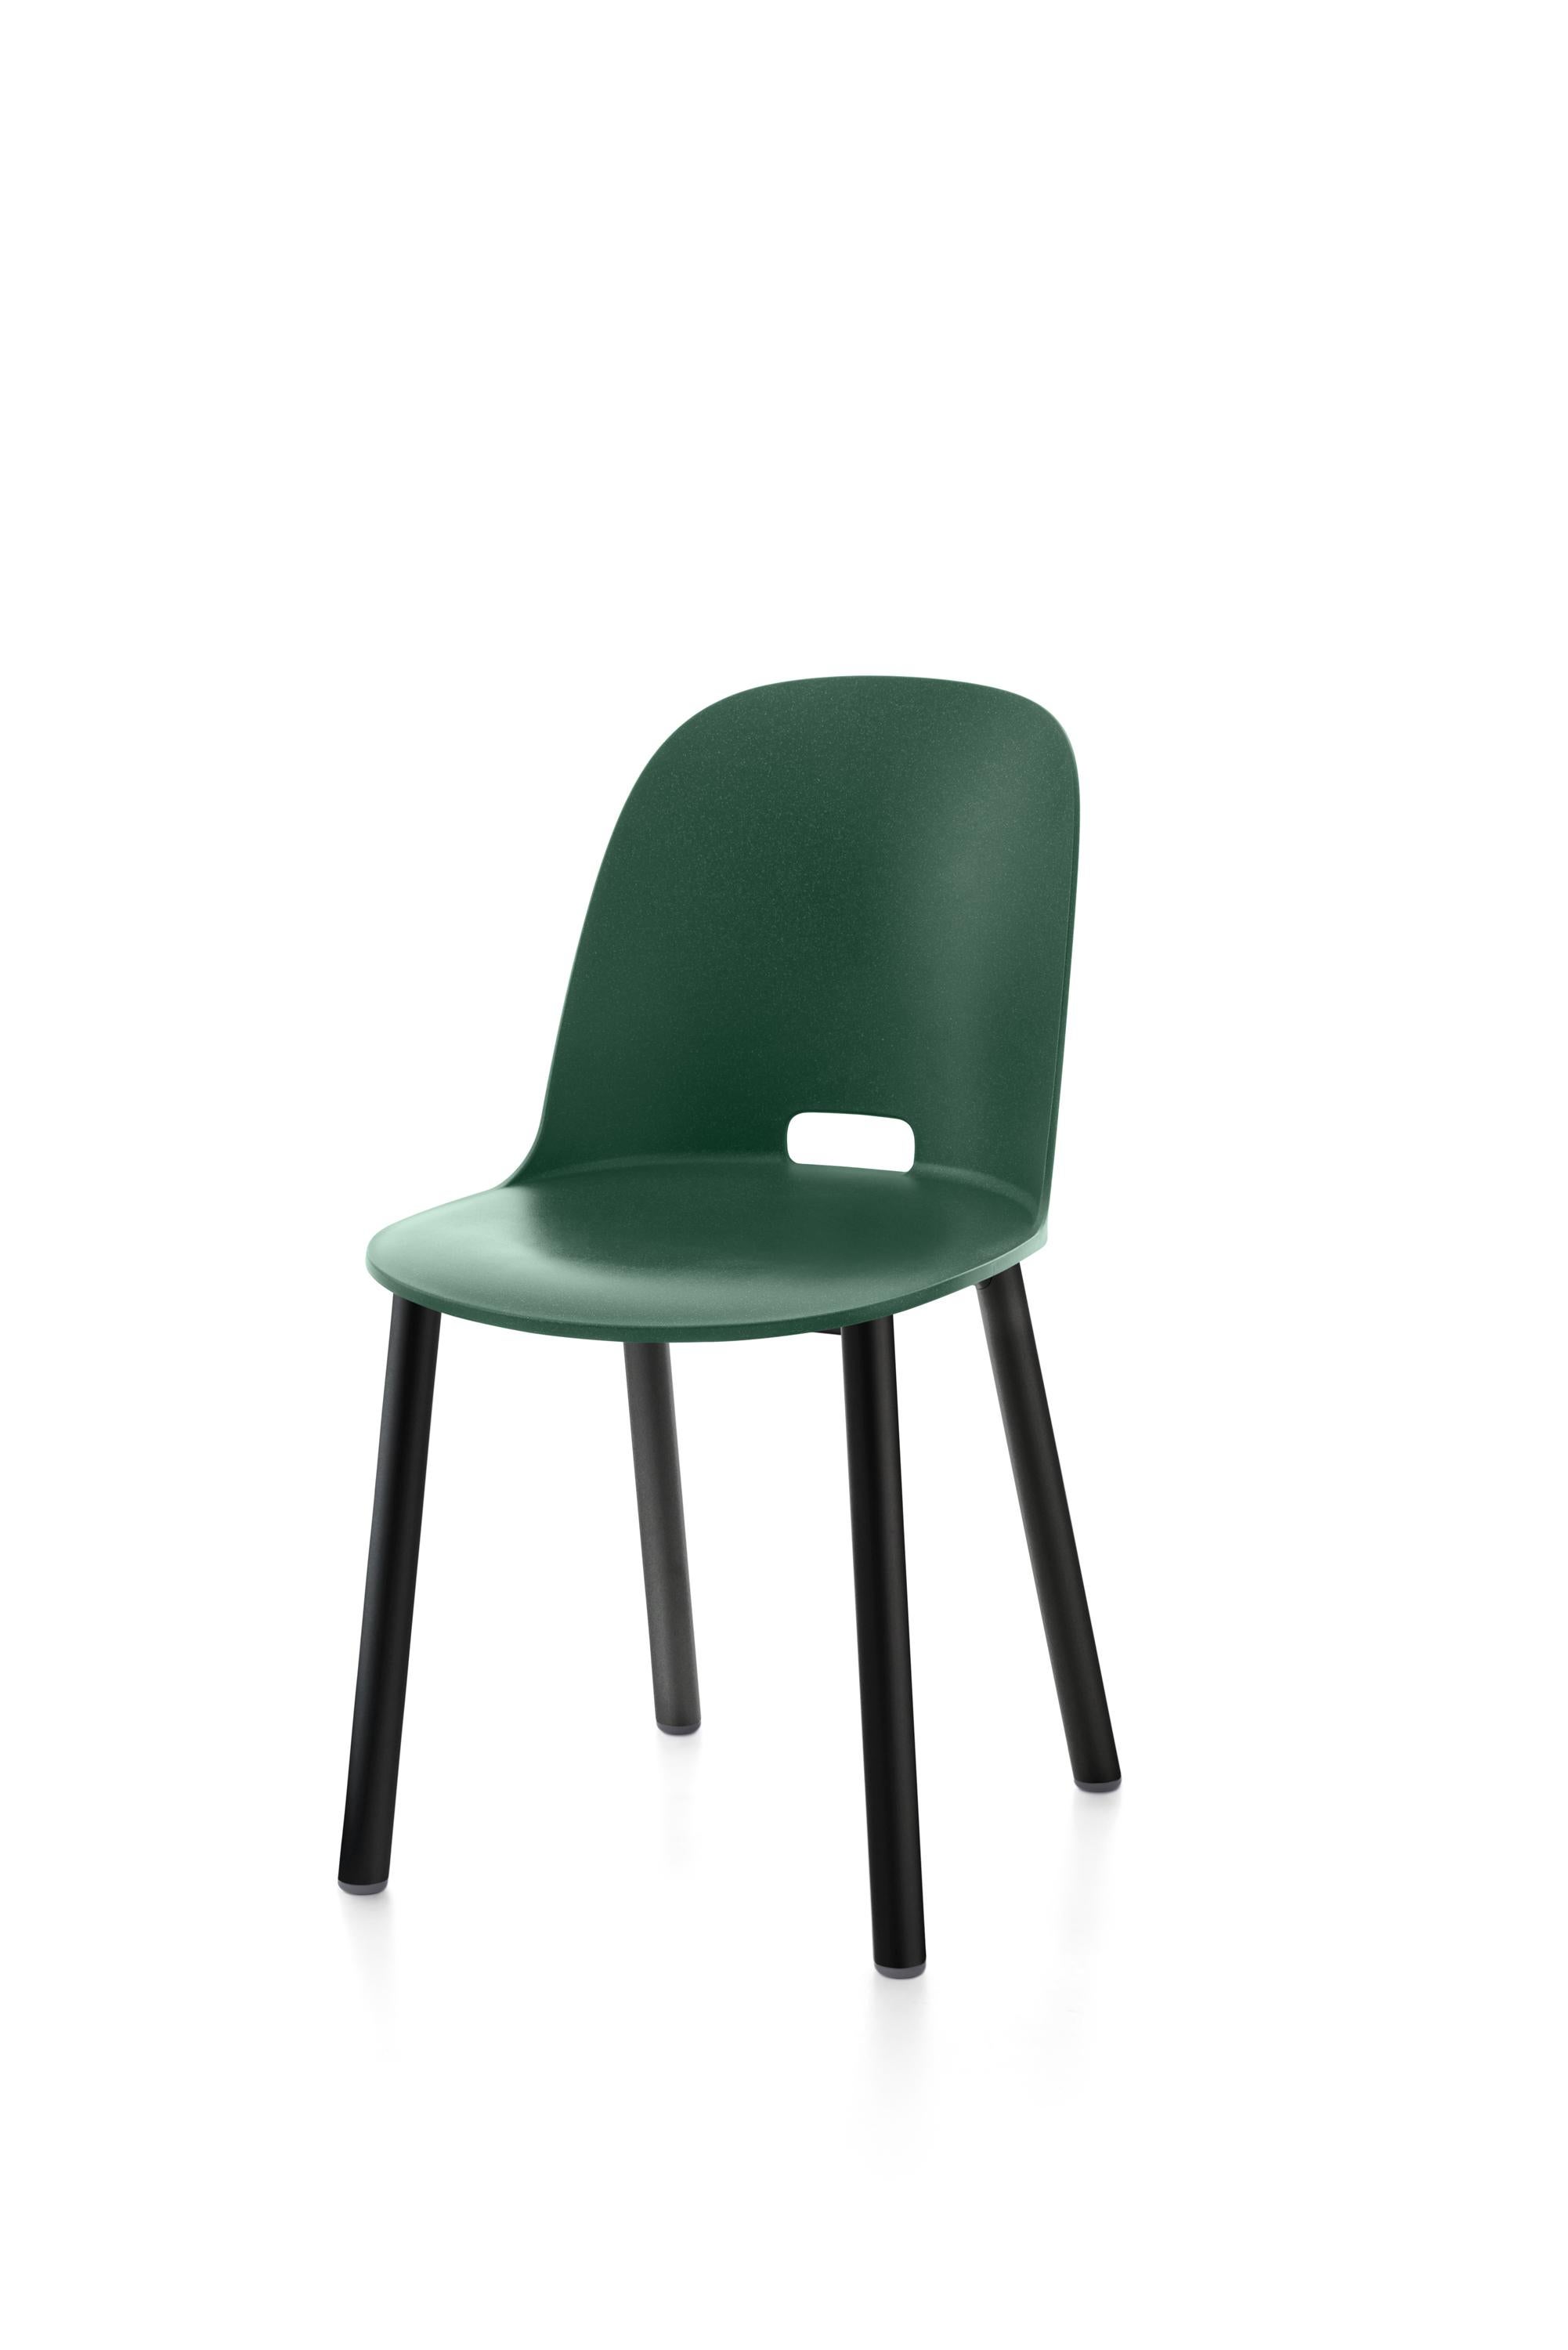 For Sale: Green (Alfi Green) Emeco Alfi High Back Chair with Black Powder Coated Aluminum Frame by Jasper